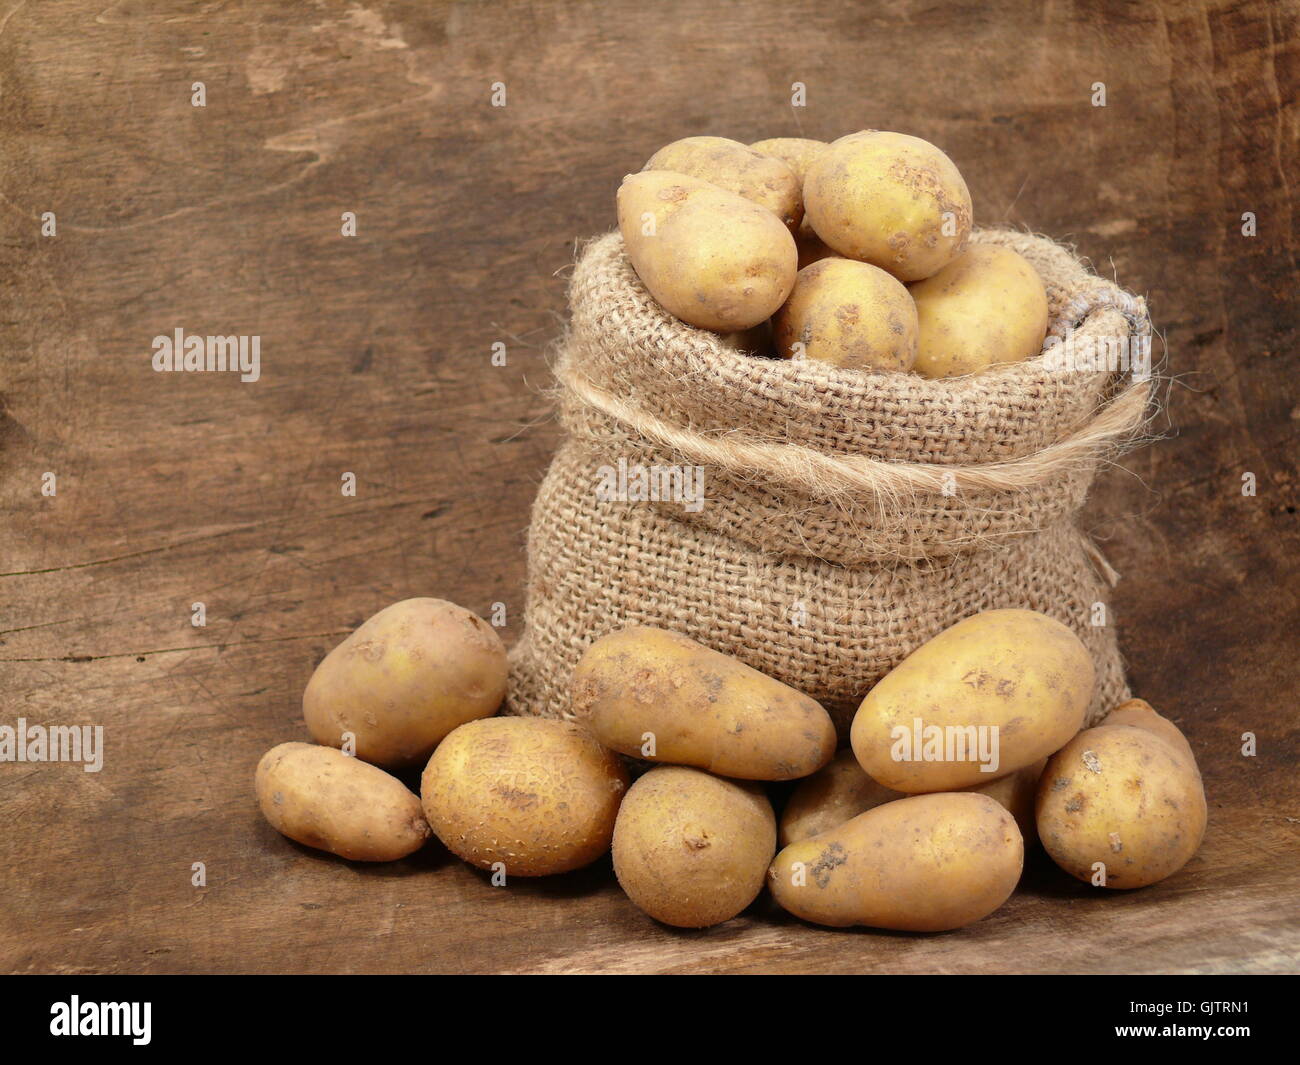 https://c8.alamy.com/comp/GJTRN1/bag-potato-harvest-potatoes-GJTRN1.jpg